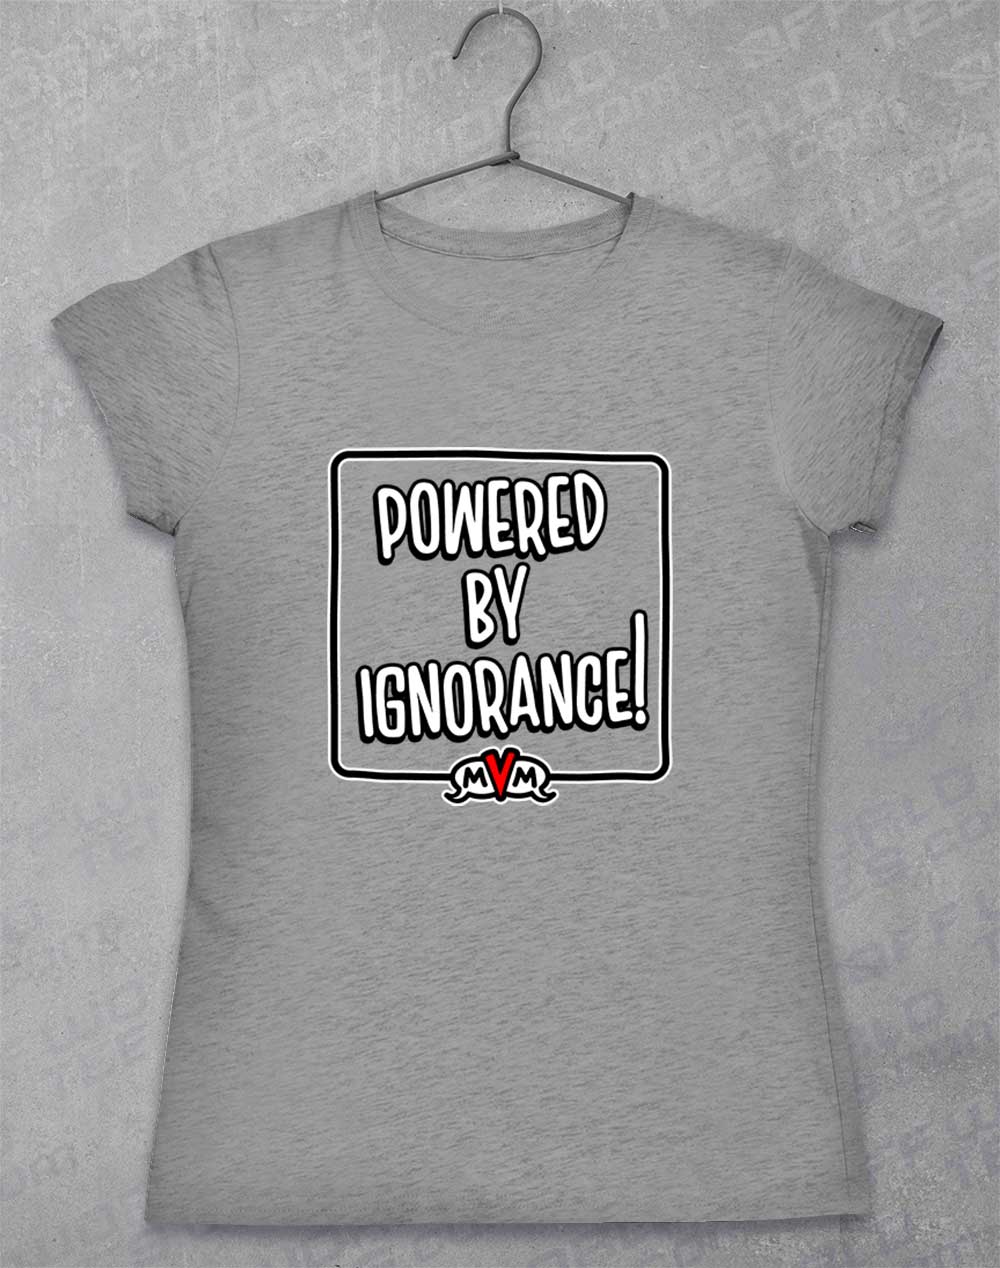 Sport Grey - MvM Powered by Ignorance Women's T-Shirt